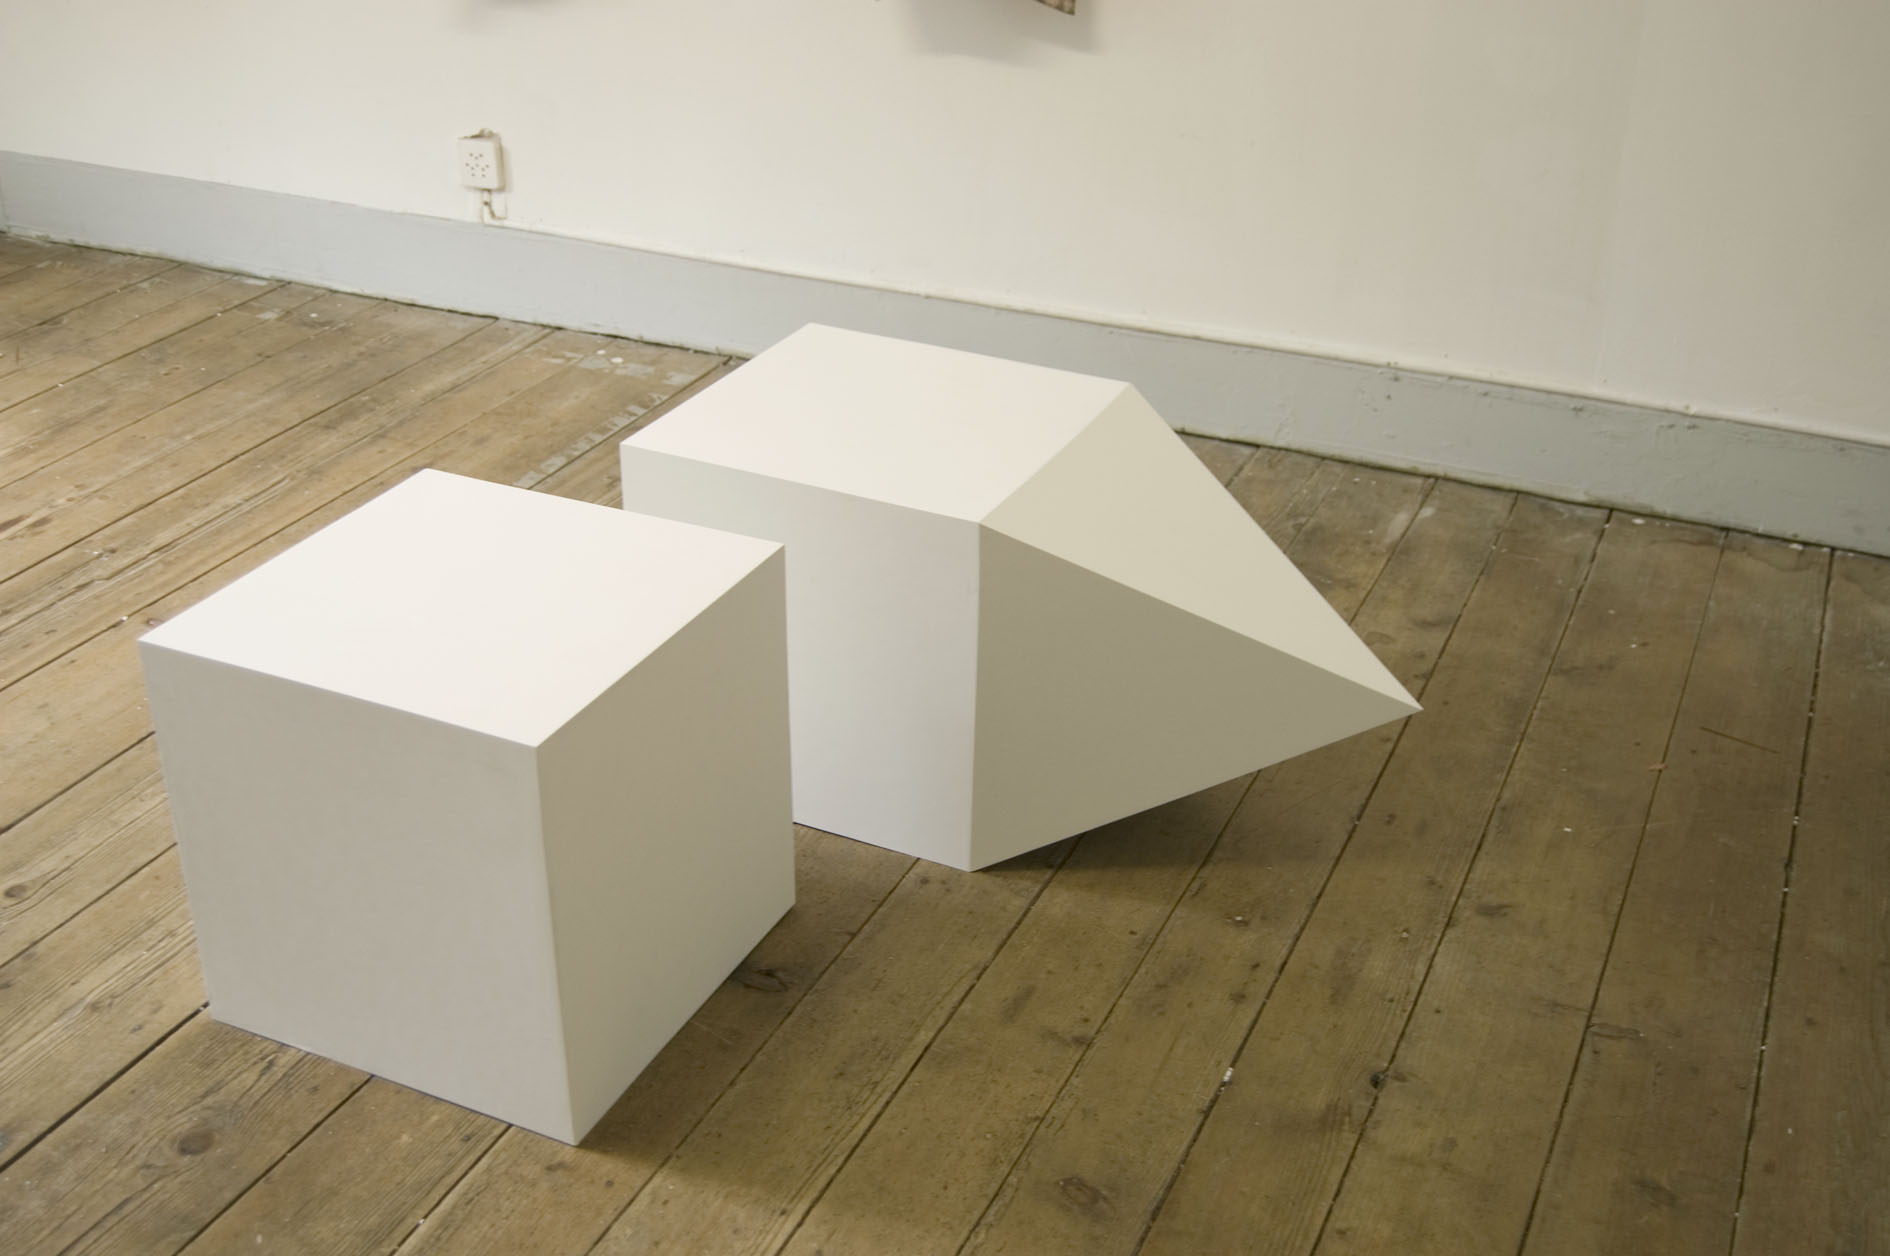 mickael lianza texture sculpture installation geneva genève art contemporain